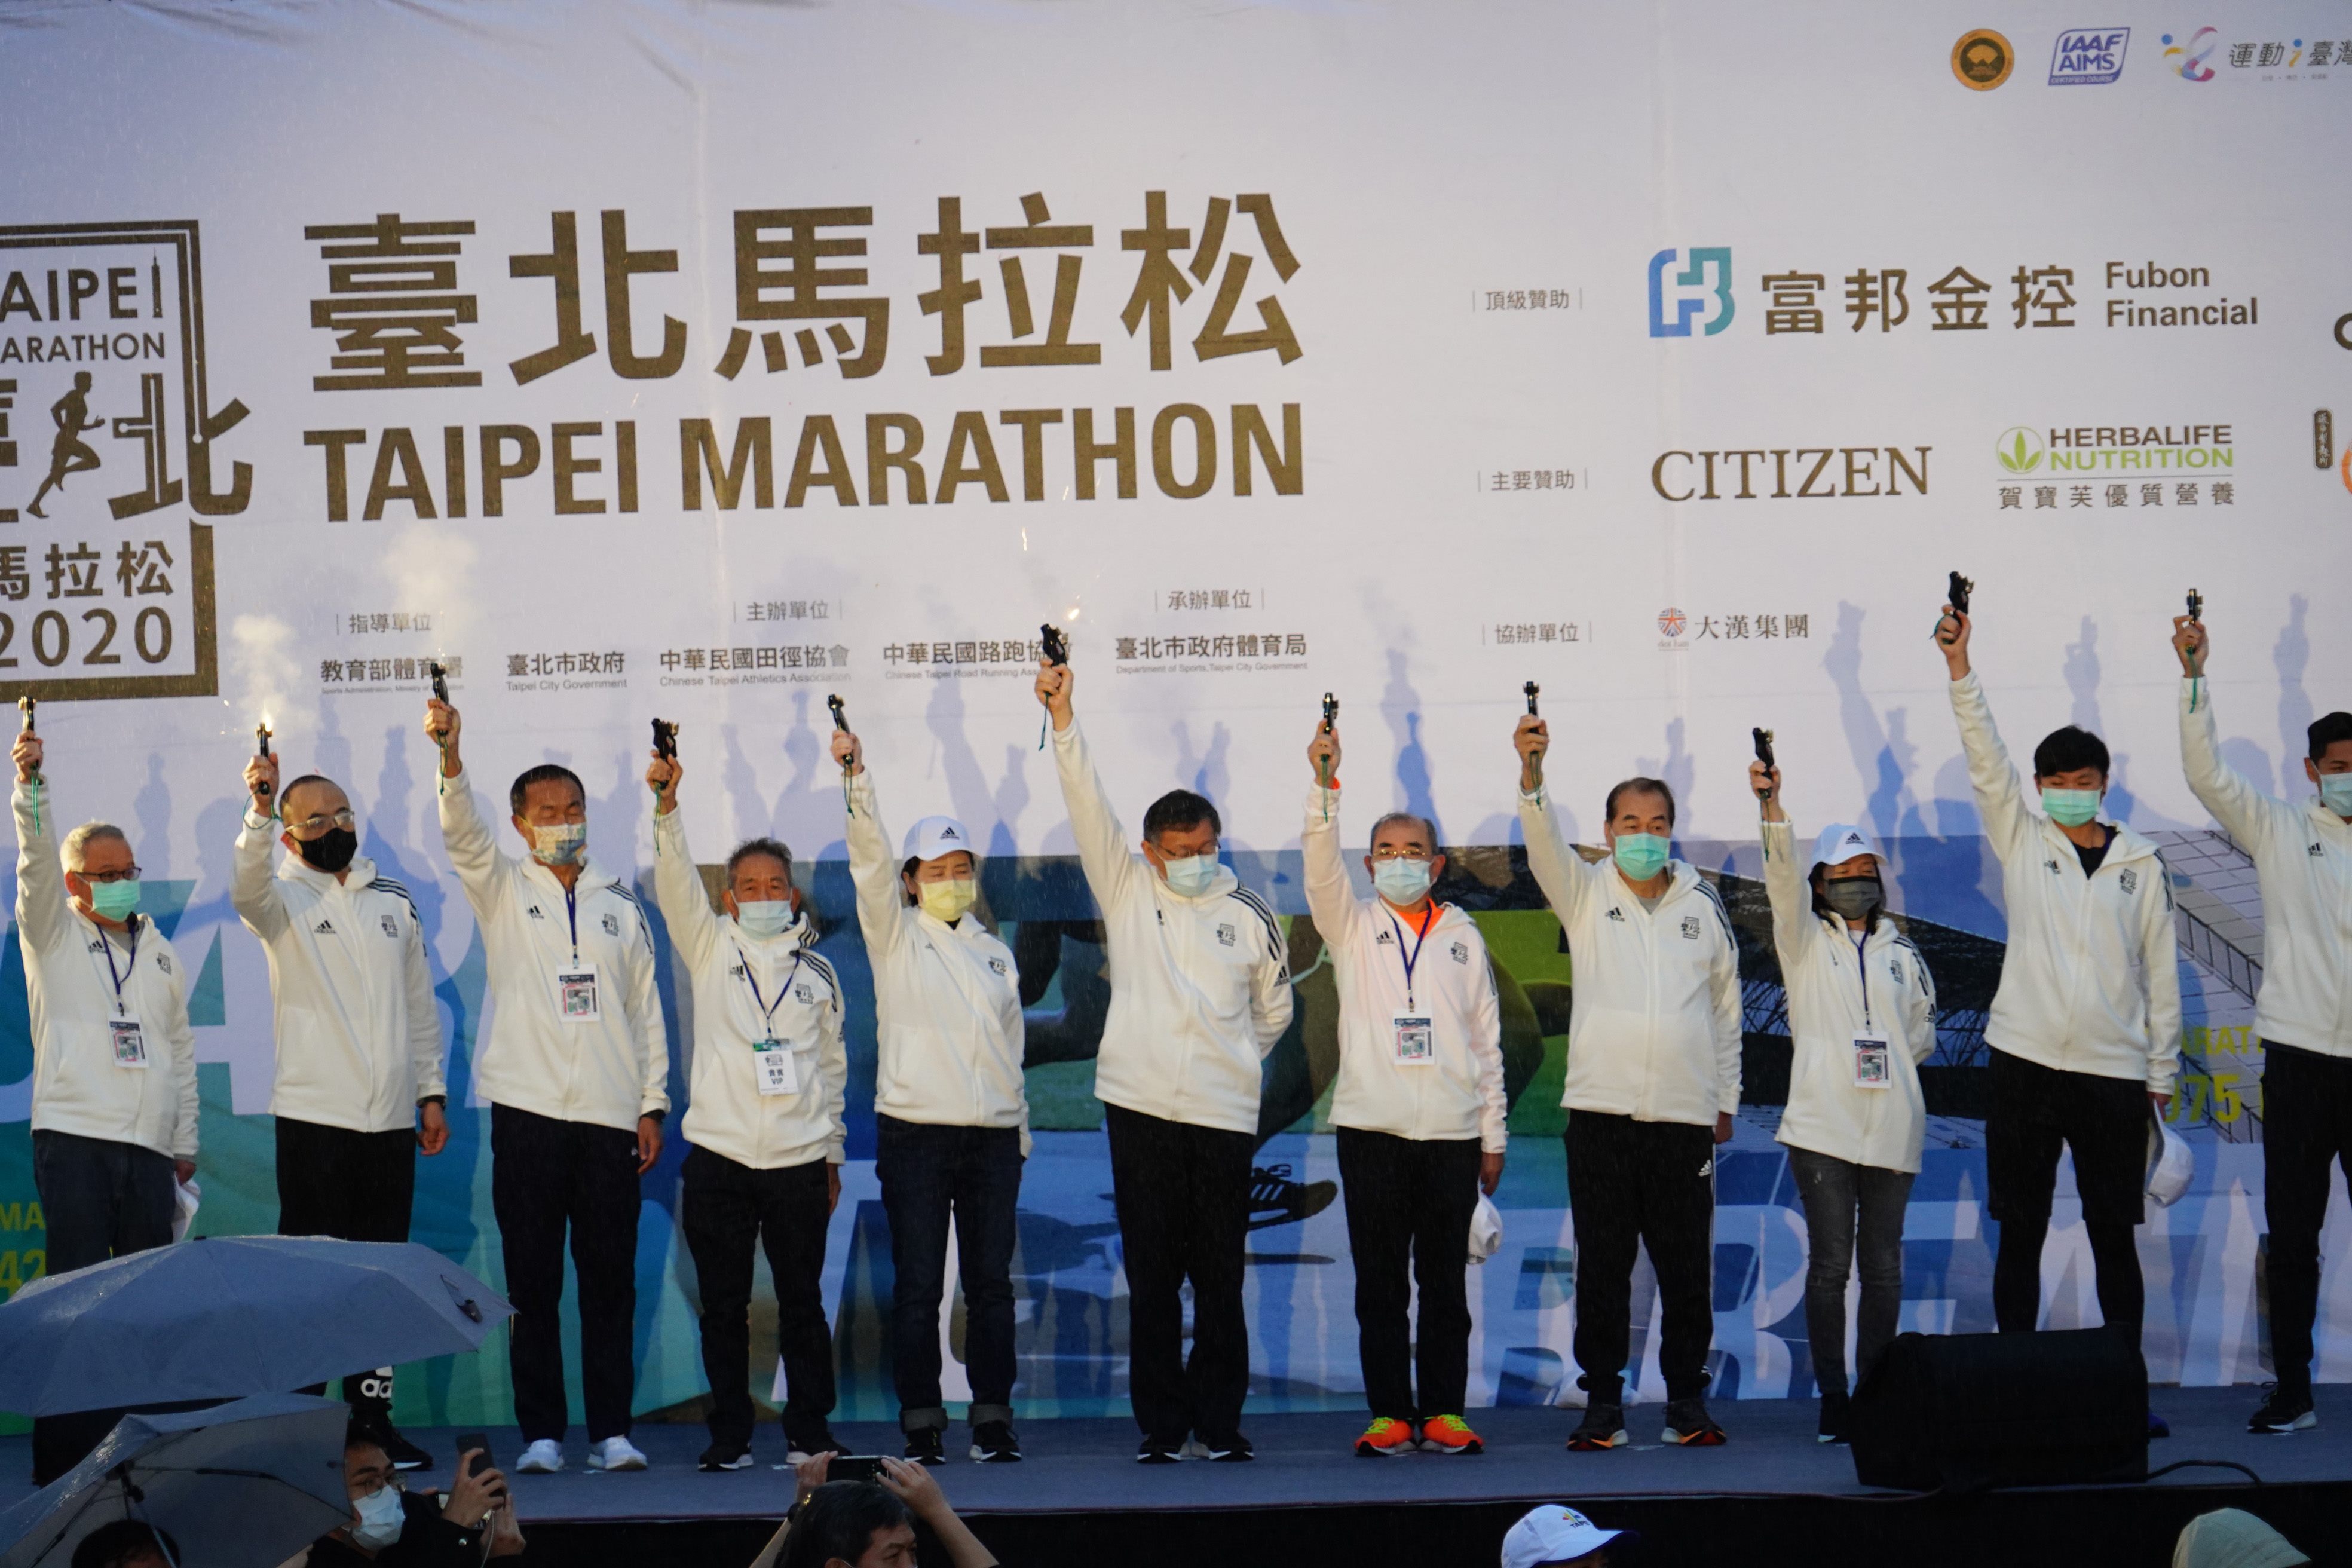 Mayor Ko fires the running pistol, kicking off this year’s Taipei Marathon